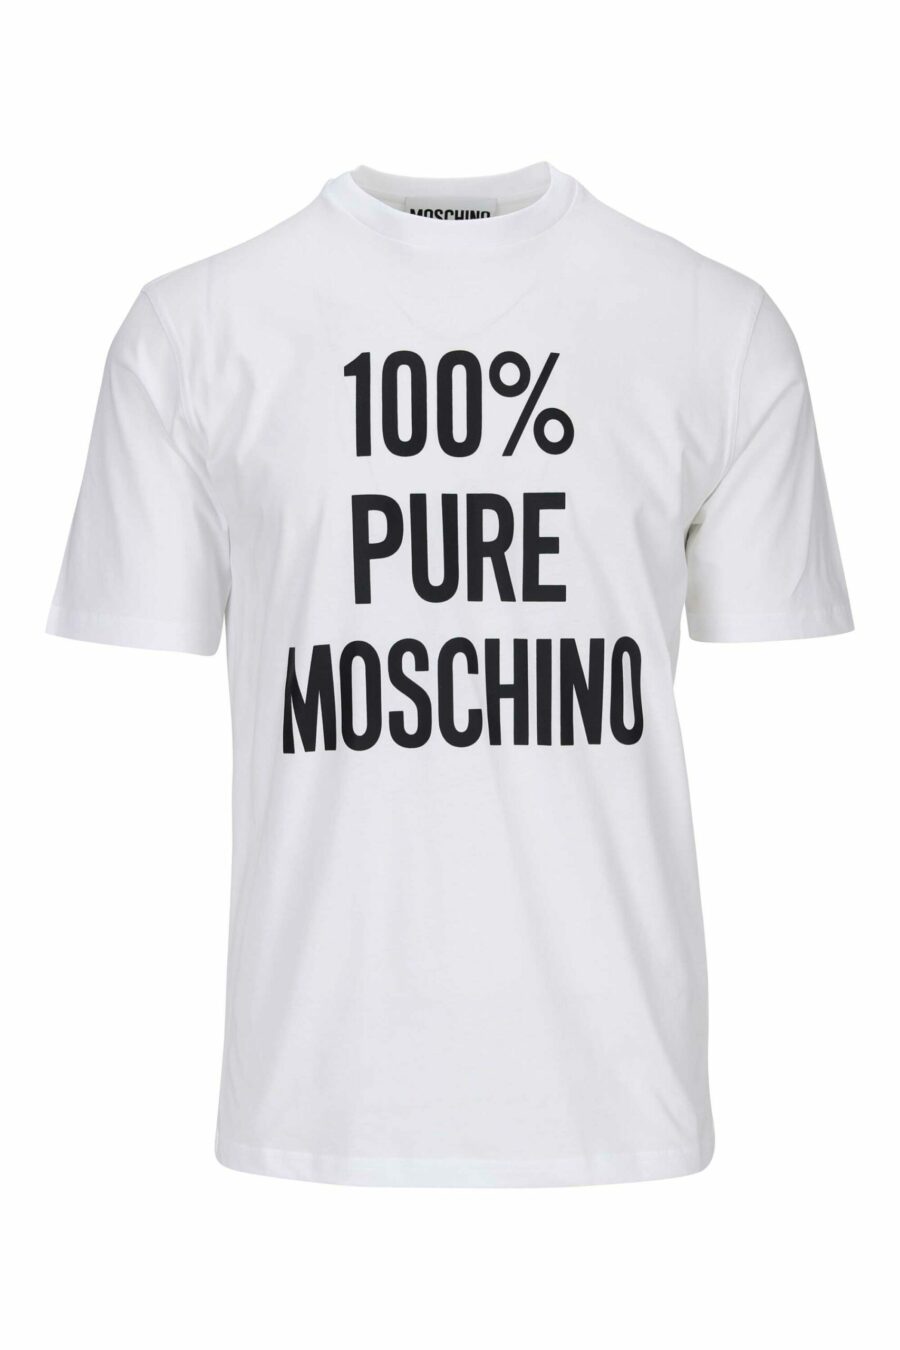 T-shirt blanc en coton bio "100% pure moschino" - 667113764948 échelonné